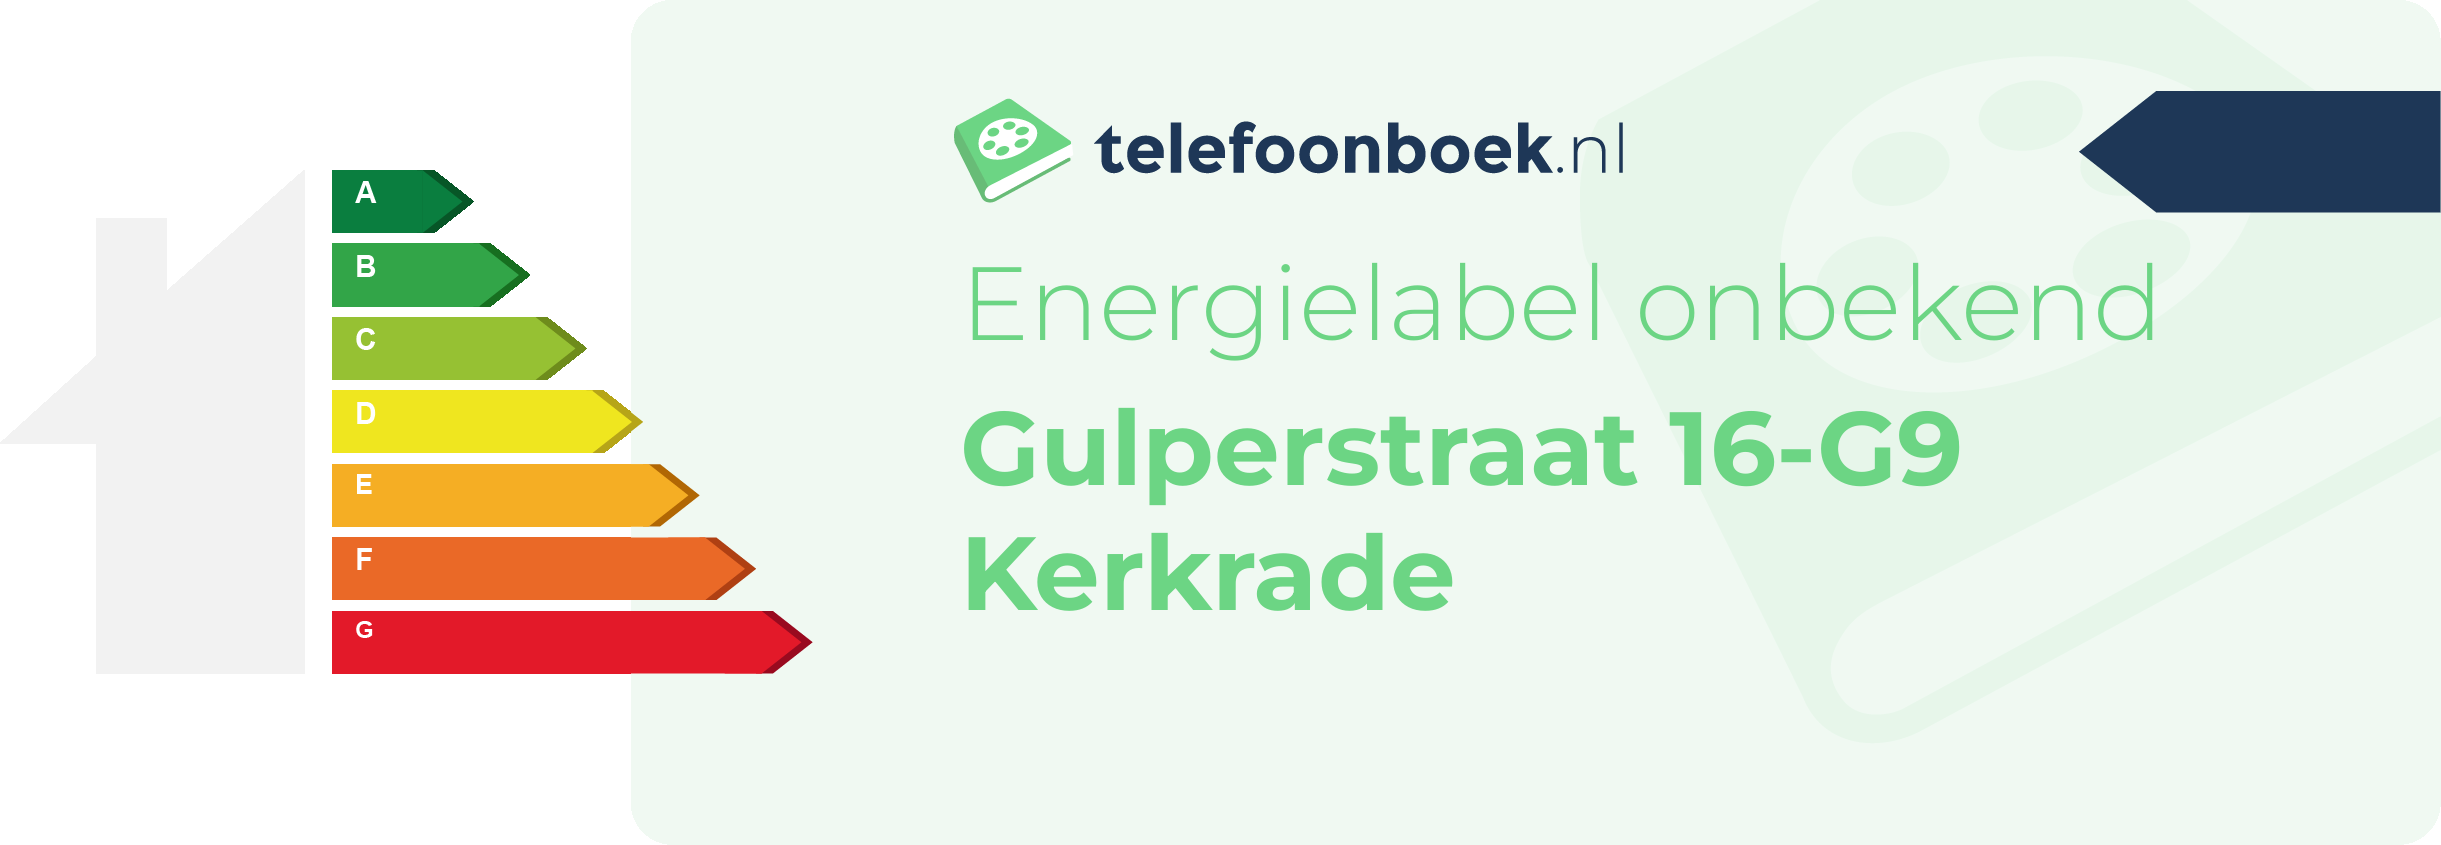 Energielabel Gulperstraat 16-G9 Kerkrade